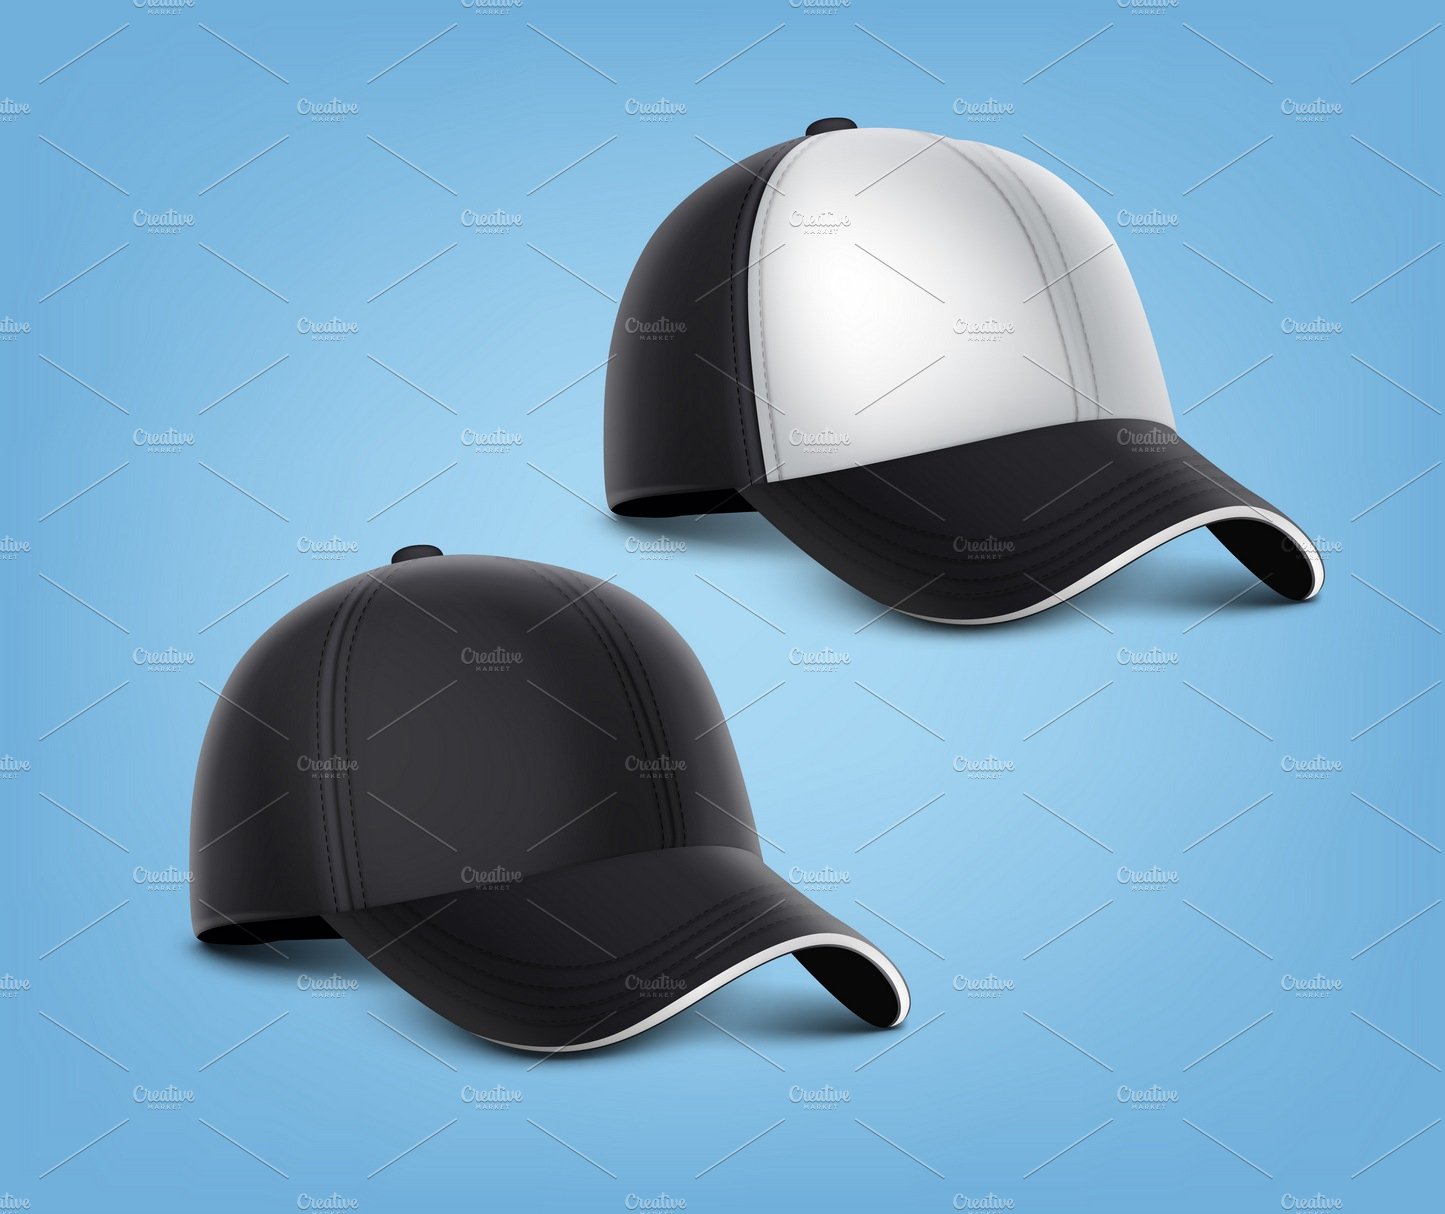 Realistic black caps cover image.